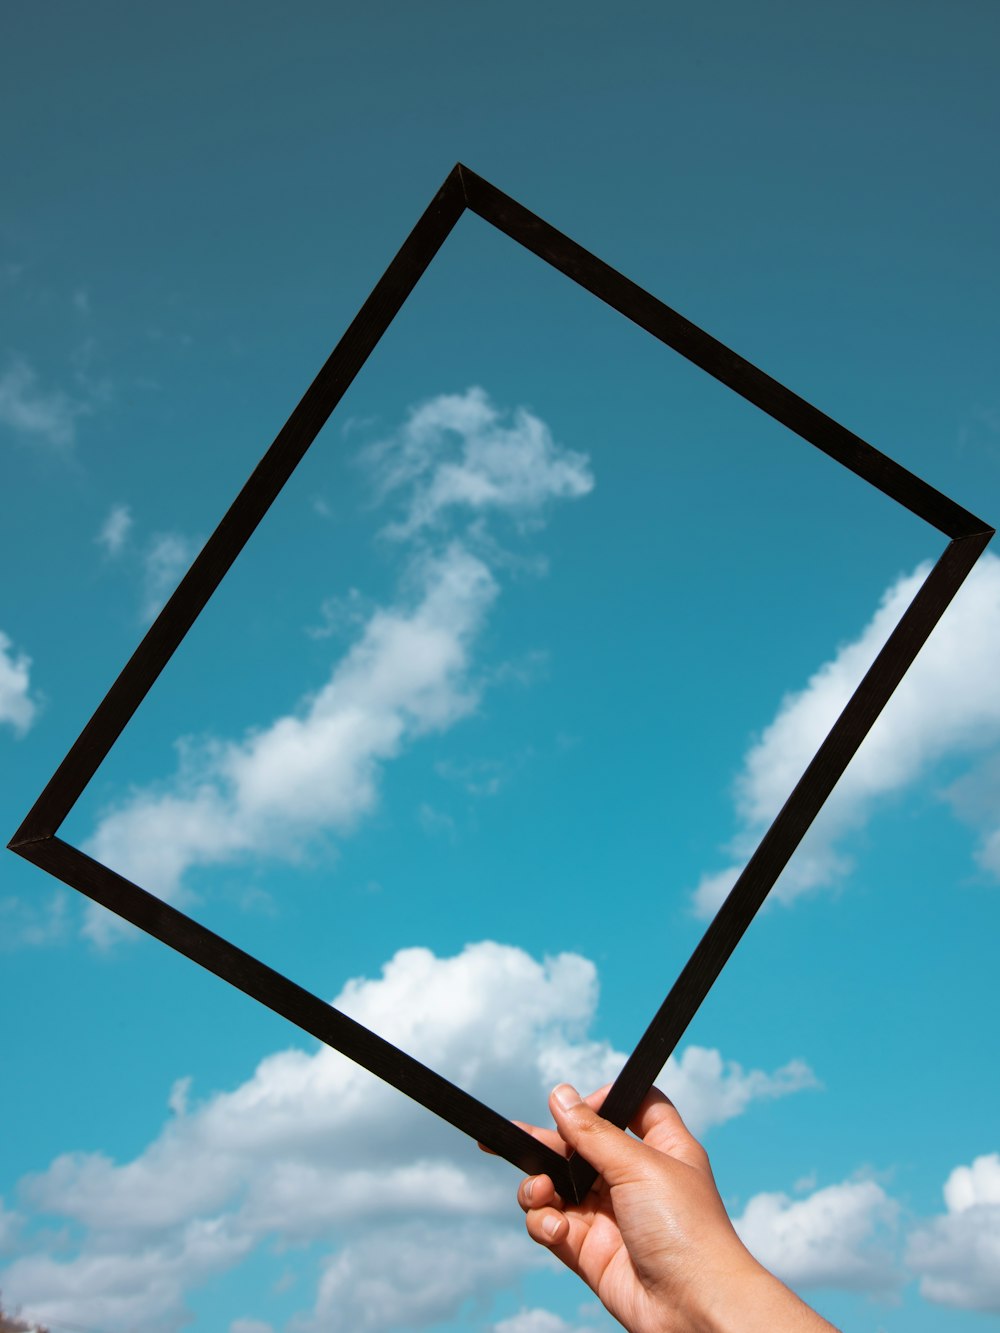 person holding black frame under blue sky during daytime